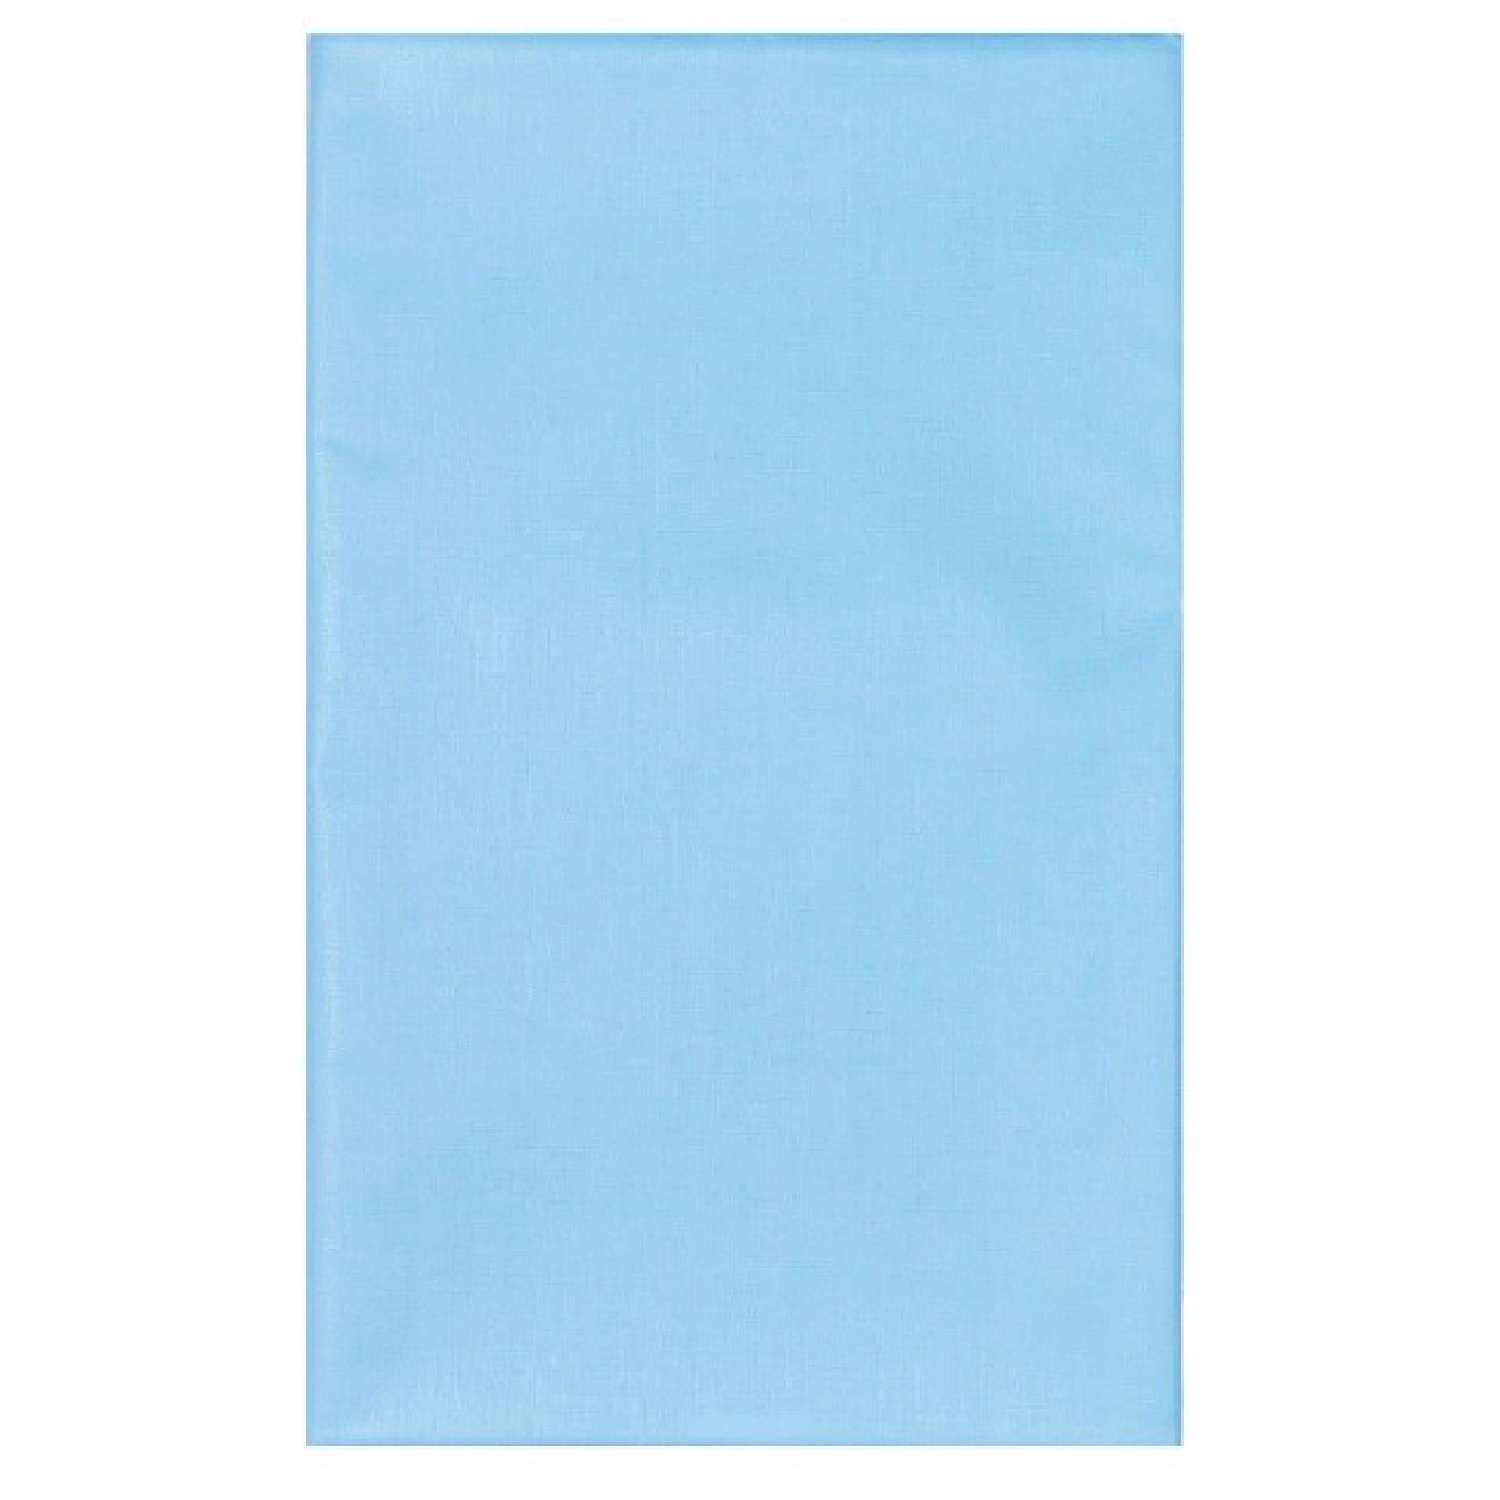 Клеенка Колорит с ПВХ покрытием без окантовки голубая 1х1.4 м - фото 1